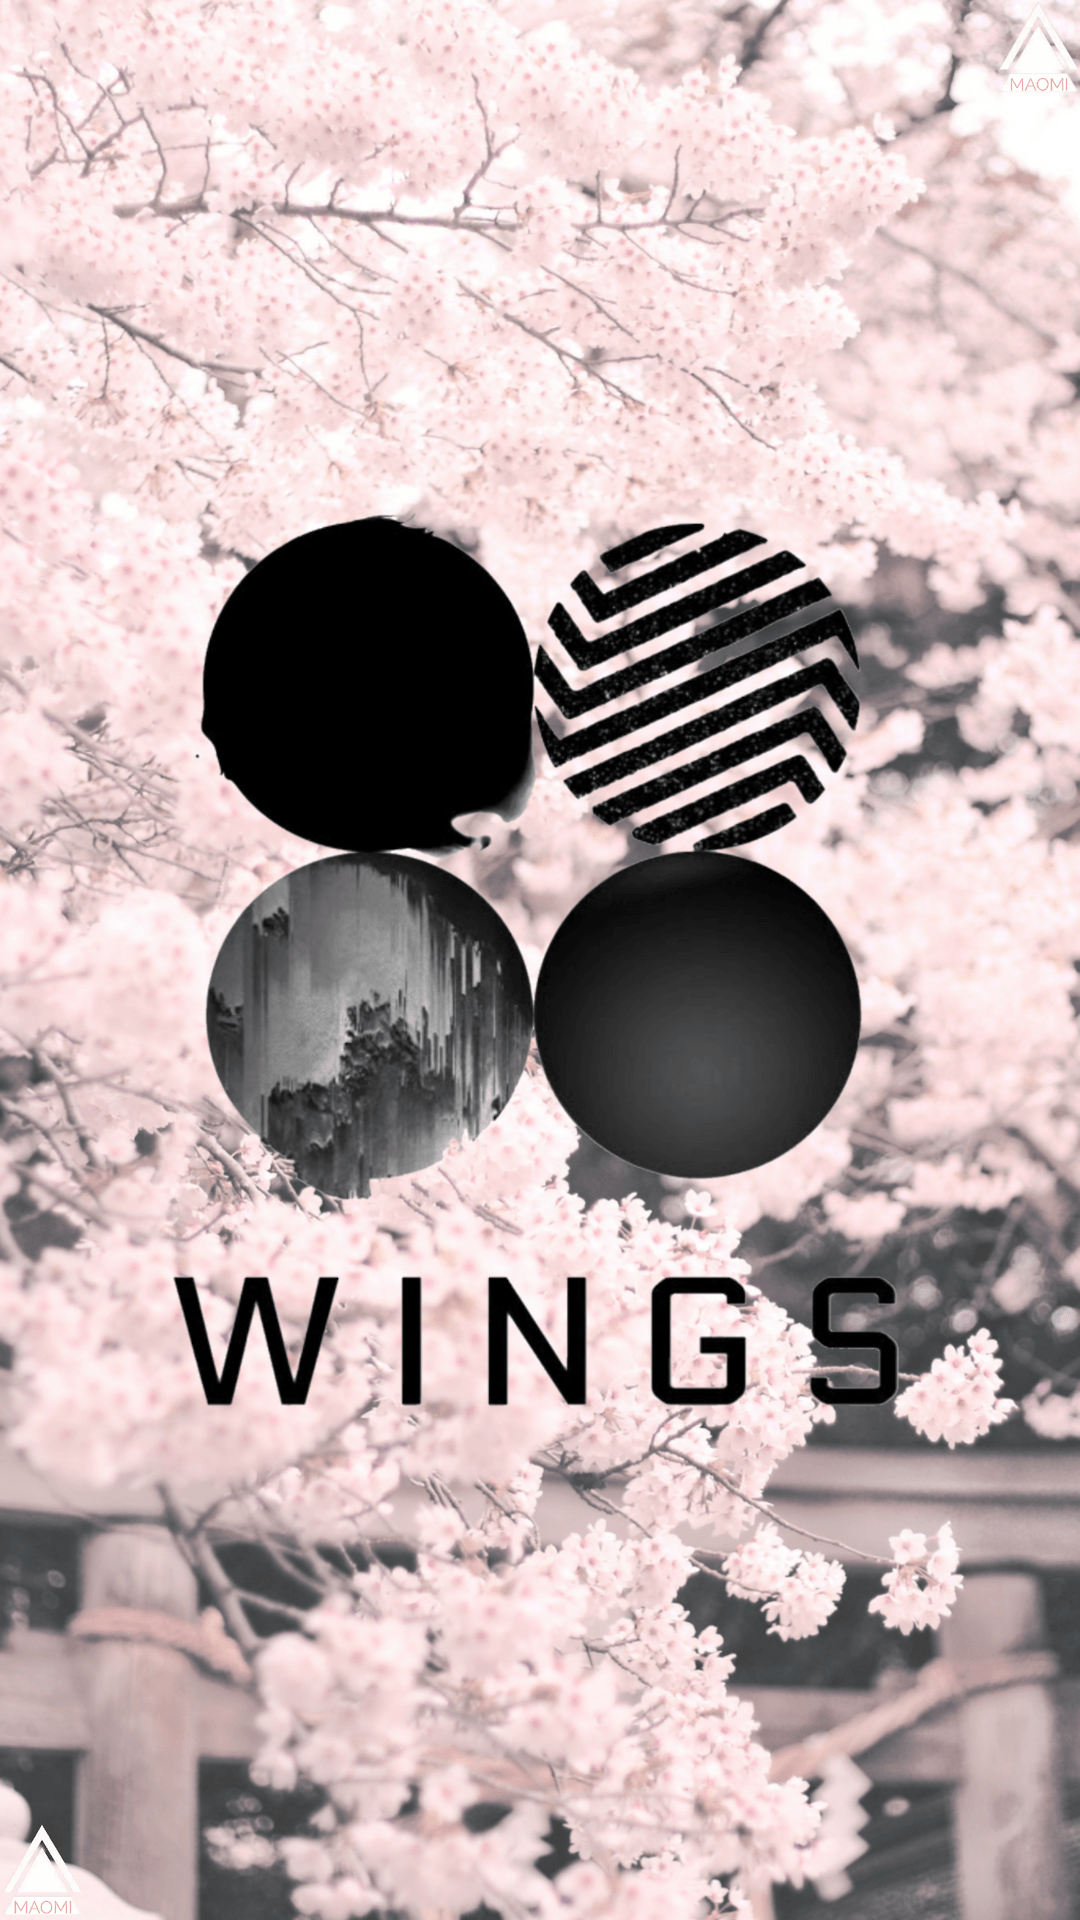 wings wallpaper hashtag Image on Tumblr